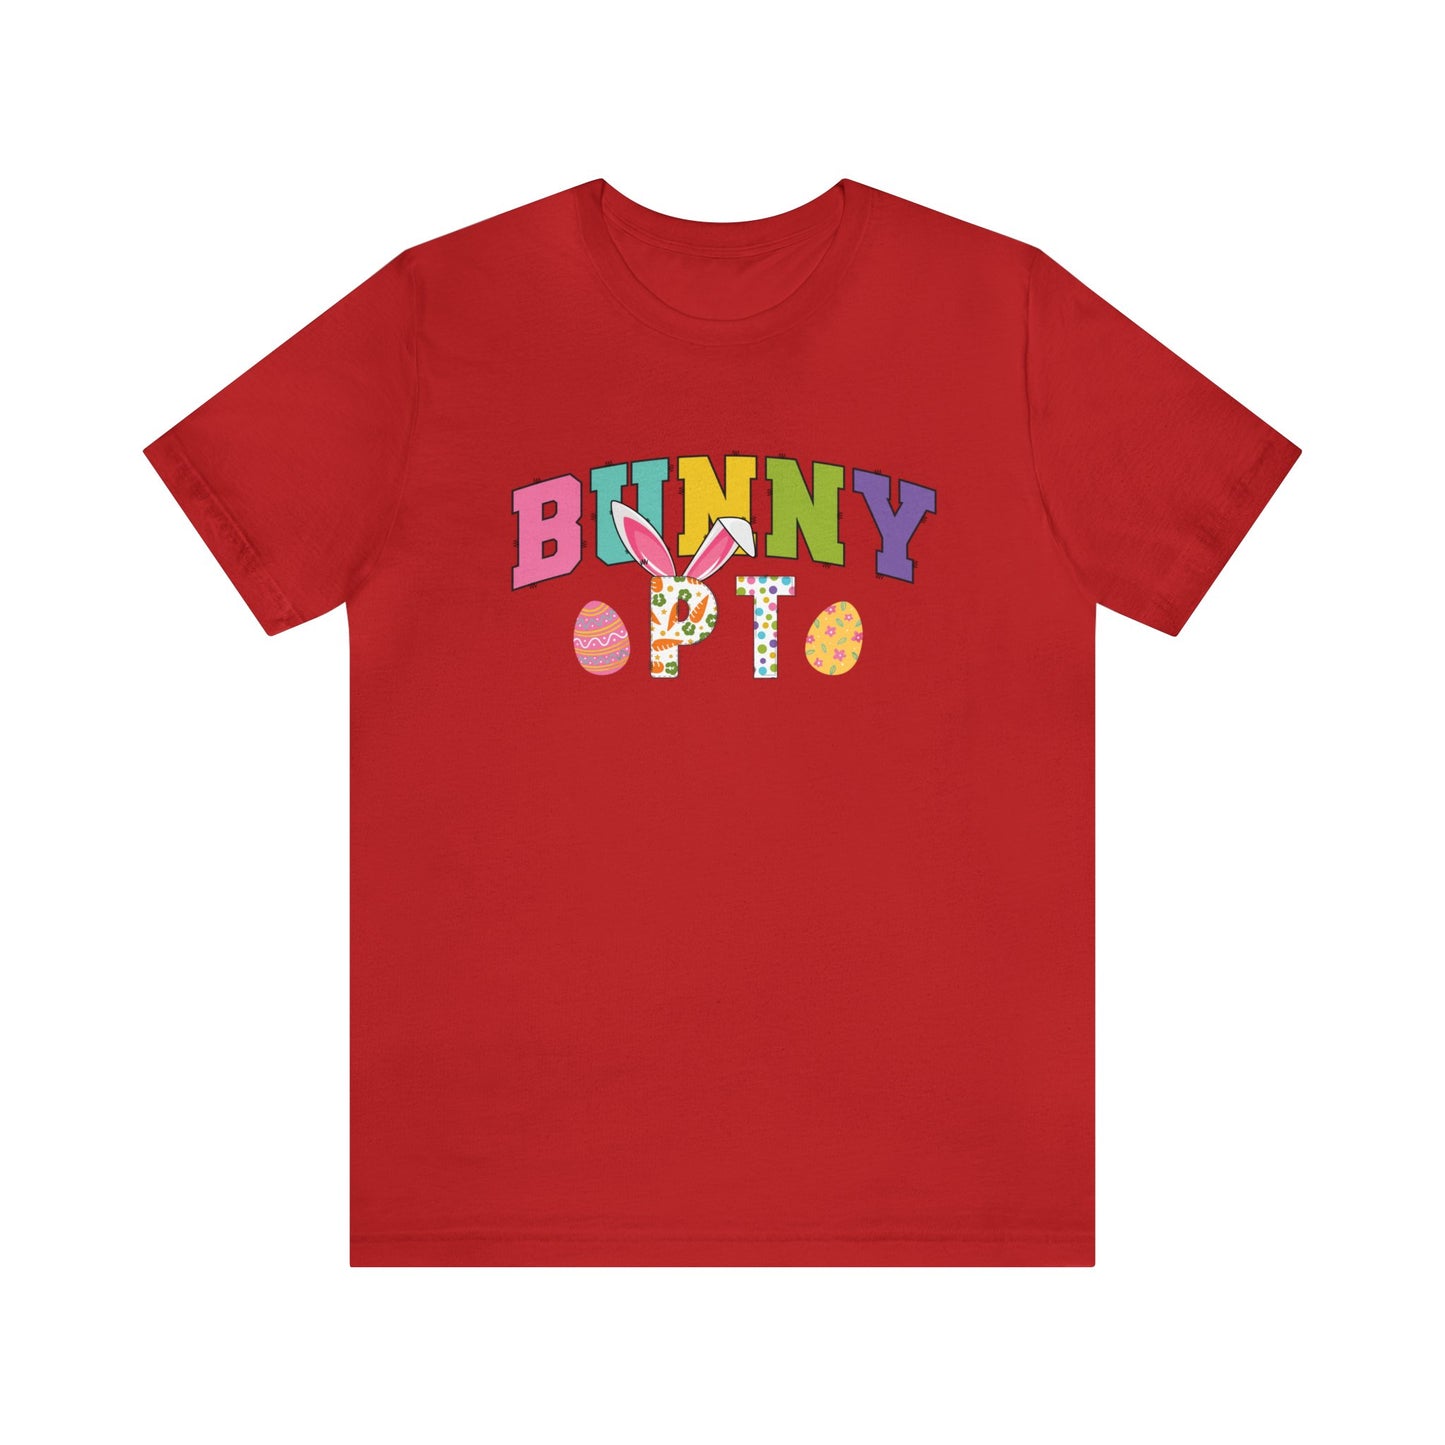 Bunny PT Shirt, Physical Therapist Shirt, Easter Shirt, Bunny Shirt, Happy Easter Shirt, Easter Bunny Shirt, Therapist Shirt